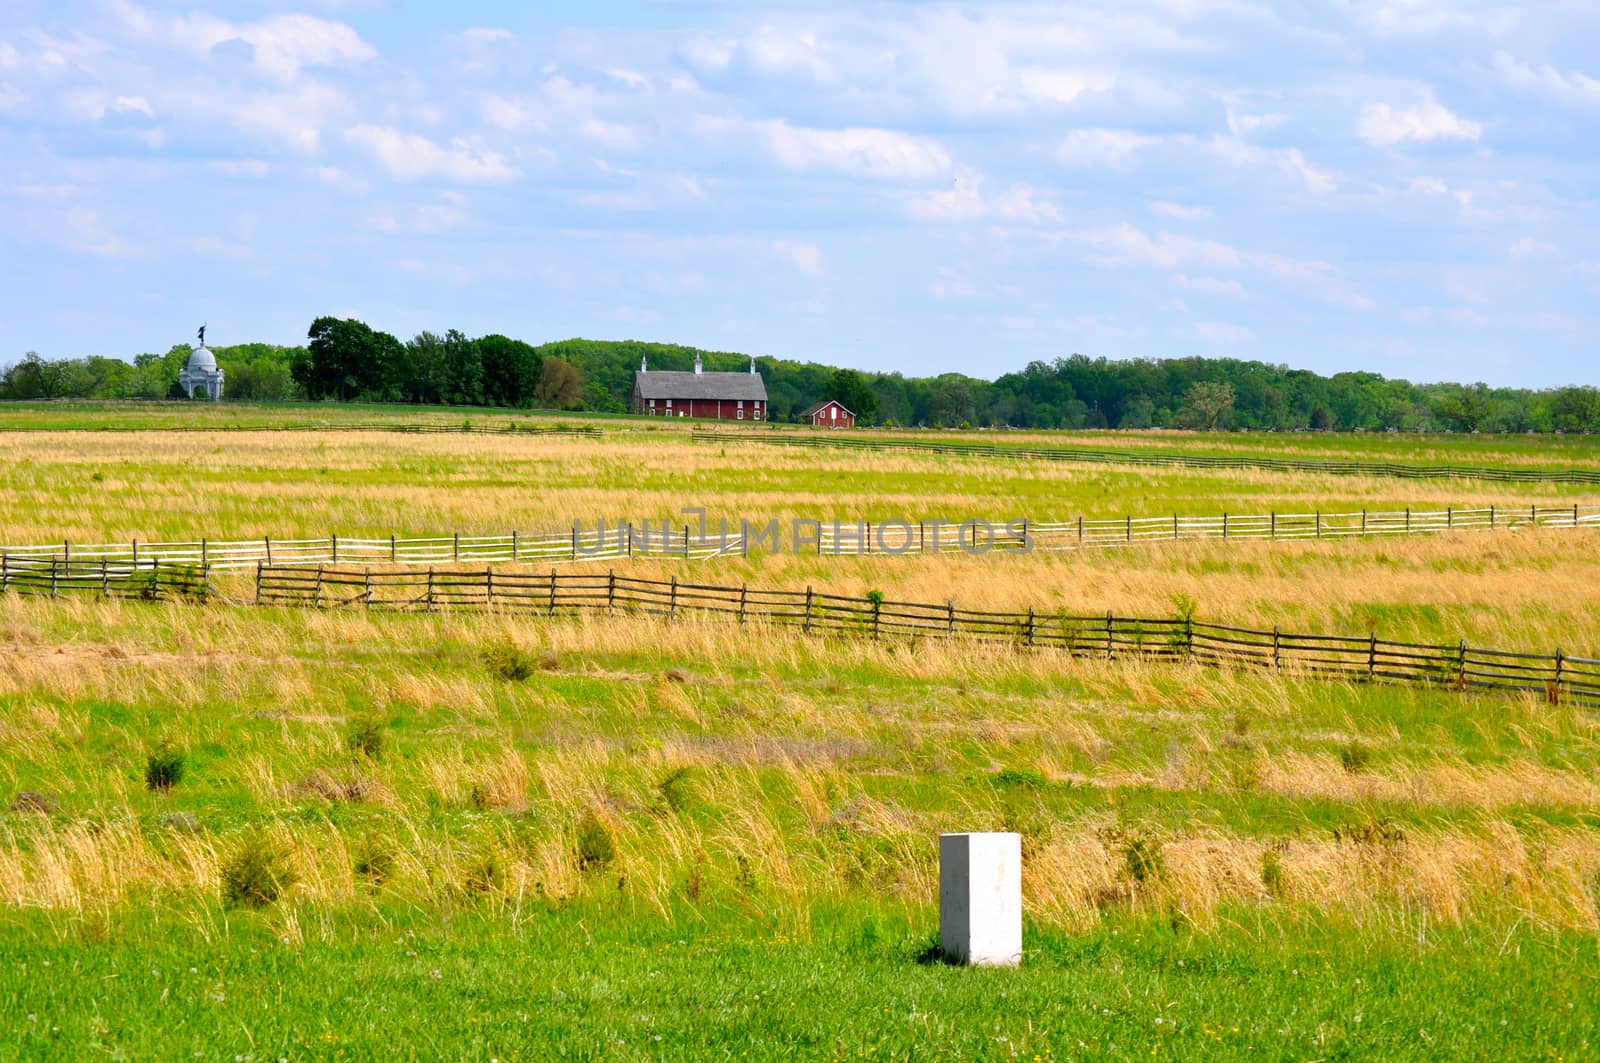 Gettysburg National Military Park - 129 by RefocusPhoto